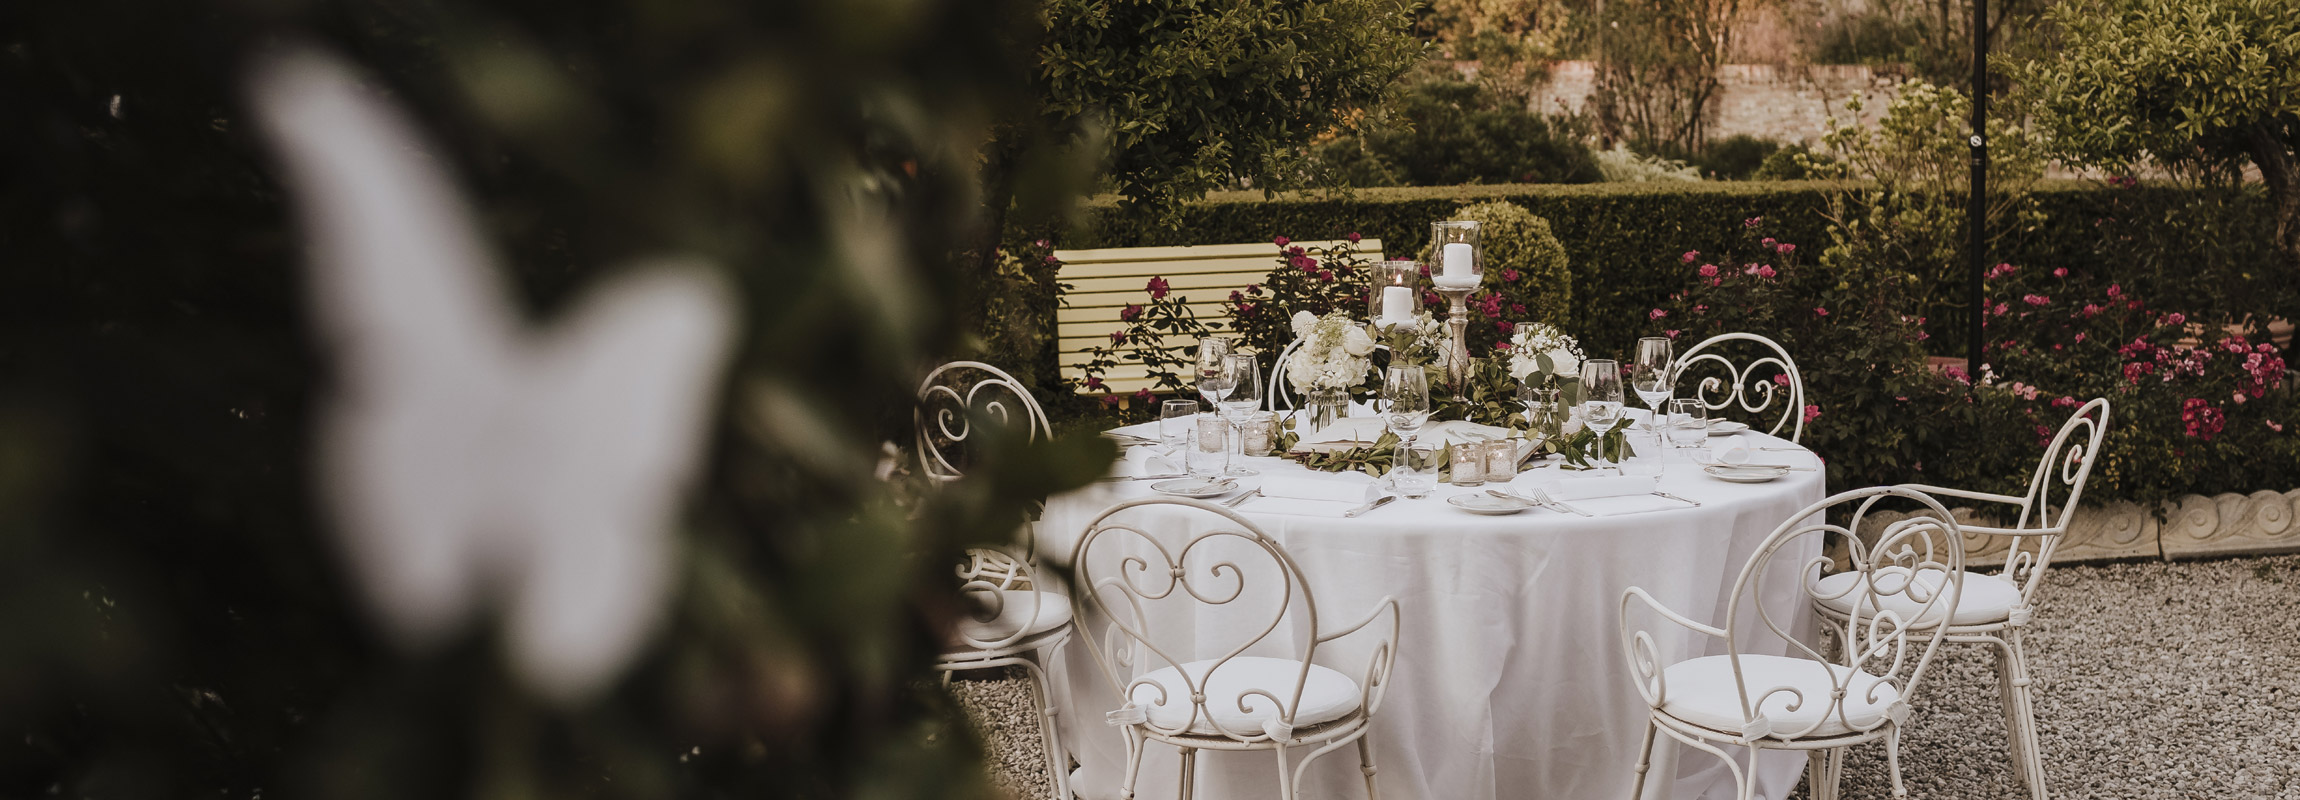 Wedding in Venice: a romantic table setting in the garden of Locanda Cipriani in Torcello